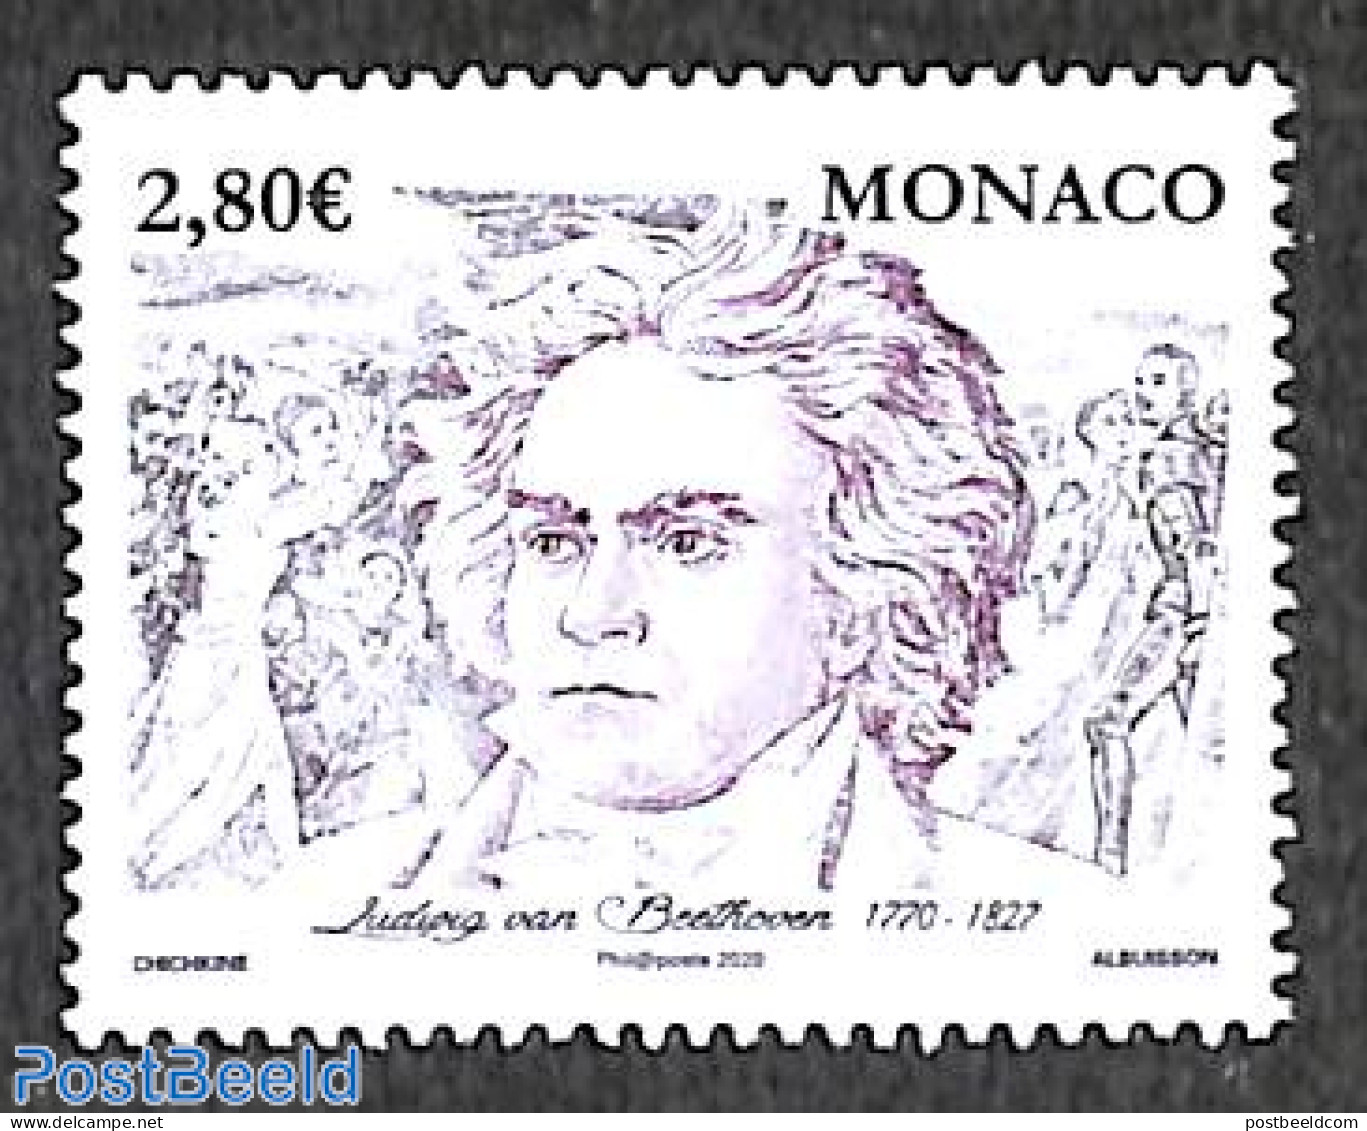 Monaco 2020 Ludwig Von Beethoven 1v, Mint NH, Performance Art - Music - Art - Composers - Nuevos